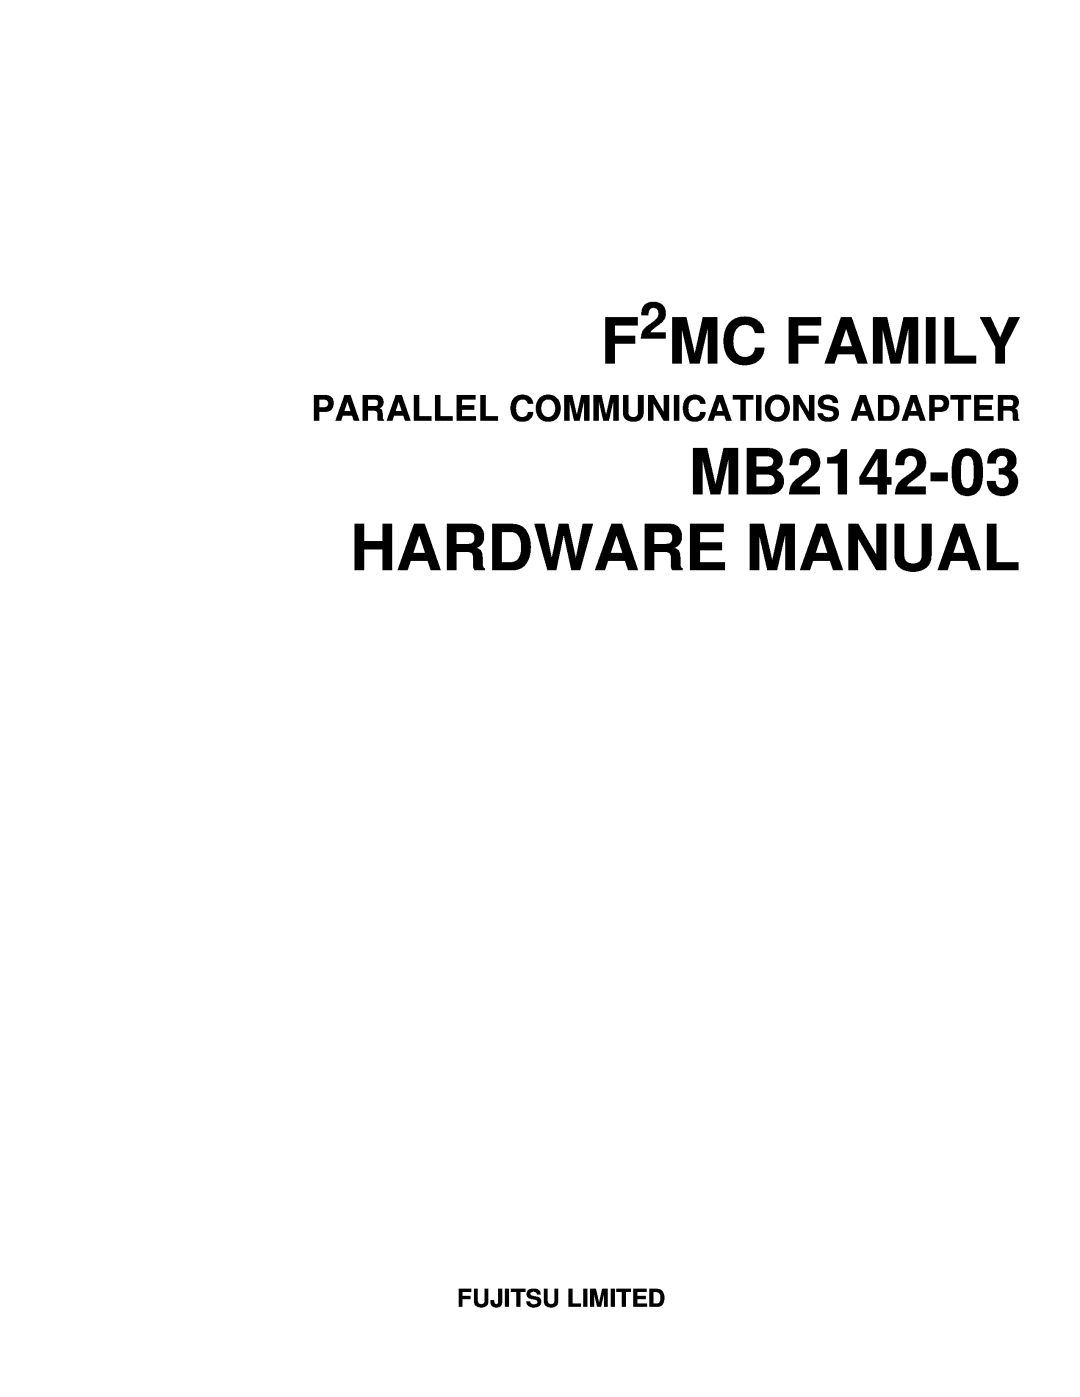 Fujitsu manual Fujitsu Limited, F2MC FAMILY, MB2142-03 HARDWARE MANUAL, Parallel Communications Adapter 